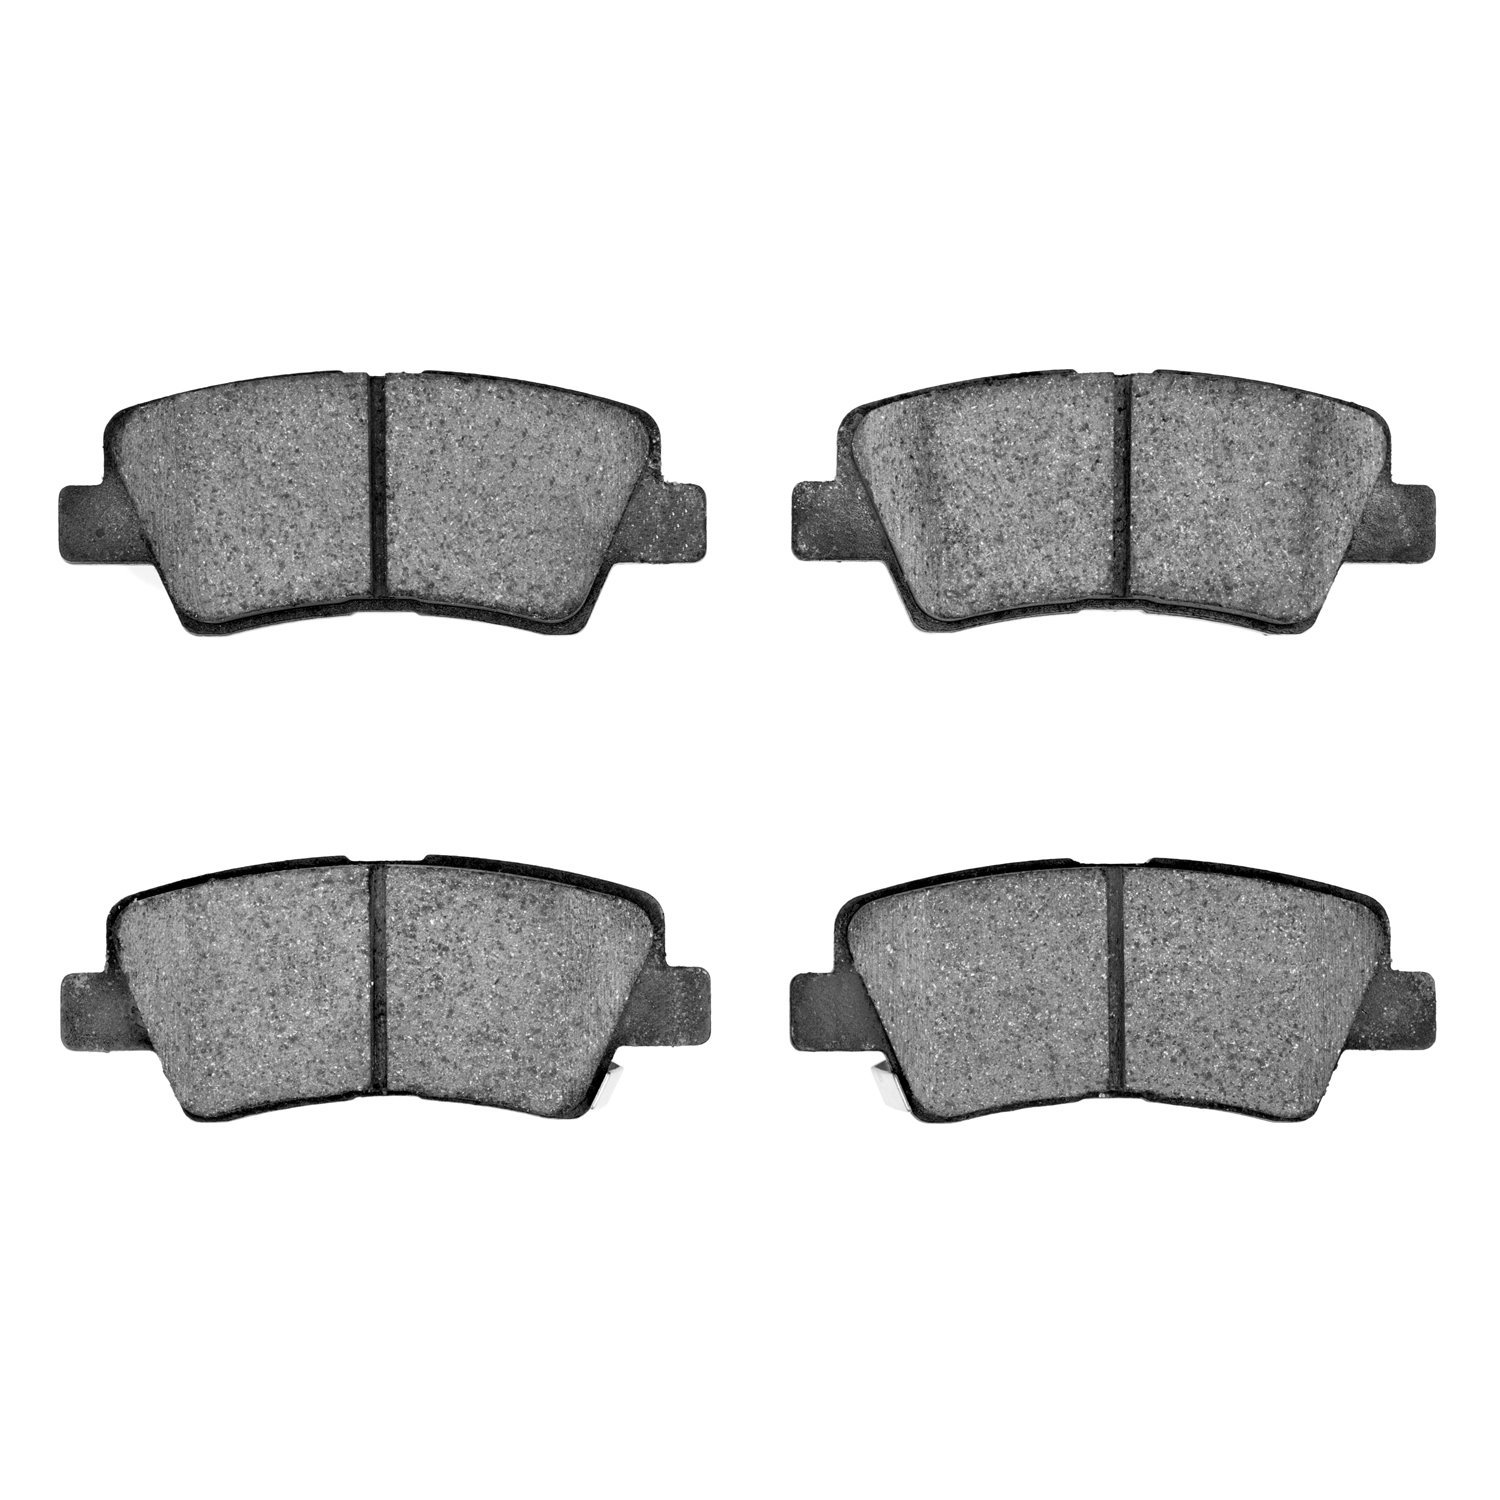 1310-1812-00 3000-Series Ceramic Brake Pads, Fits Select Multiple Makes/Models, Position: Rear